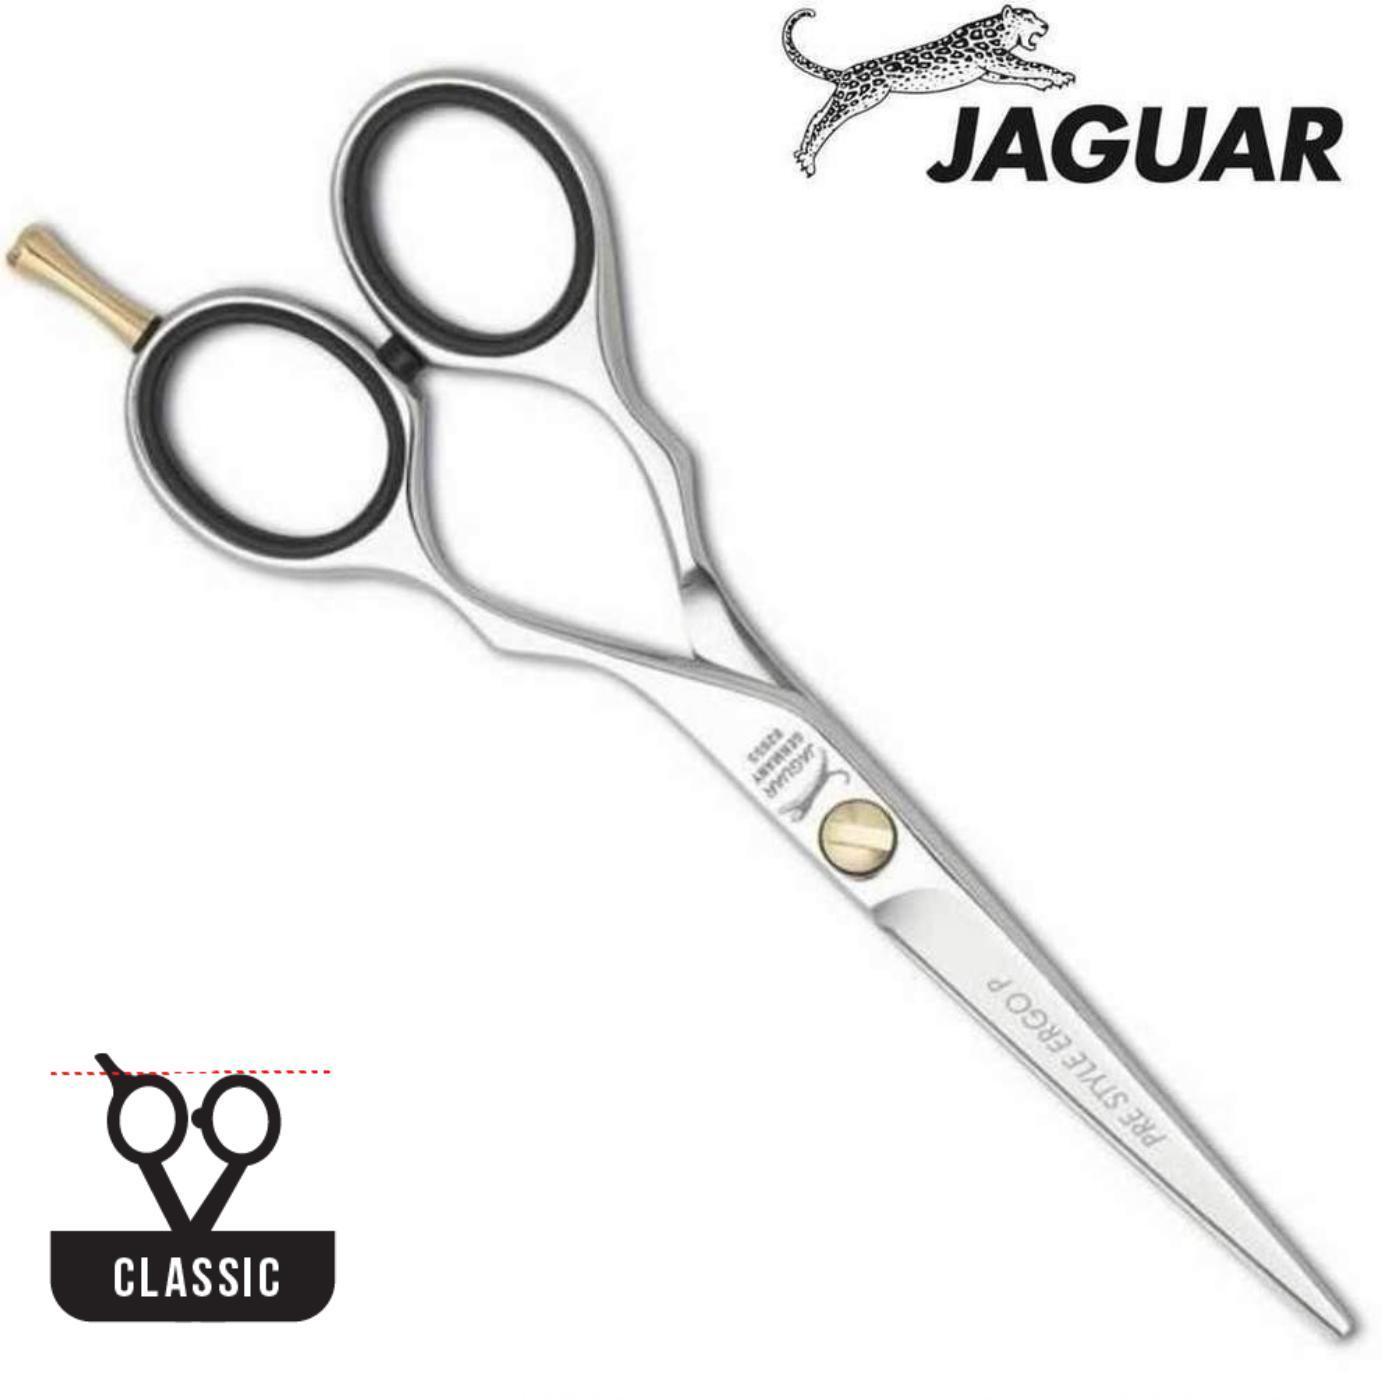 Perseguir Claire veneno Tijeras de peluquería Jaguar Pre Style Ergo P - Japan Scissors USA